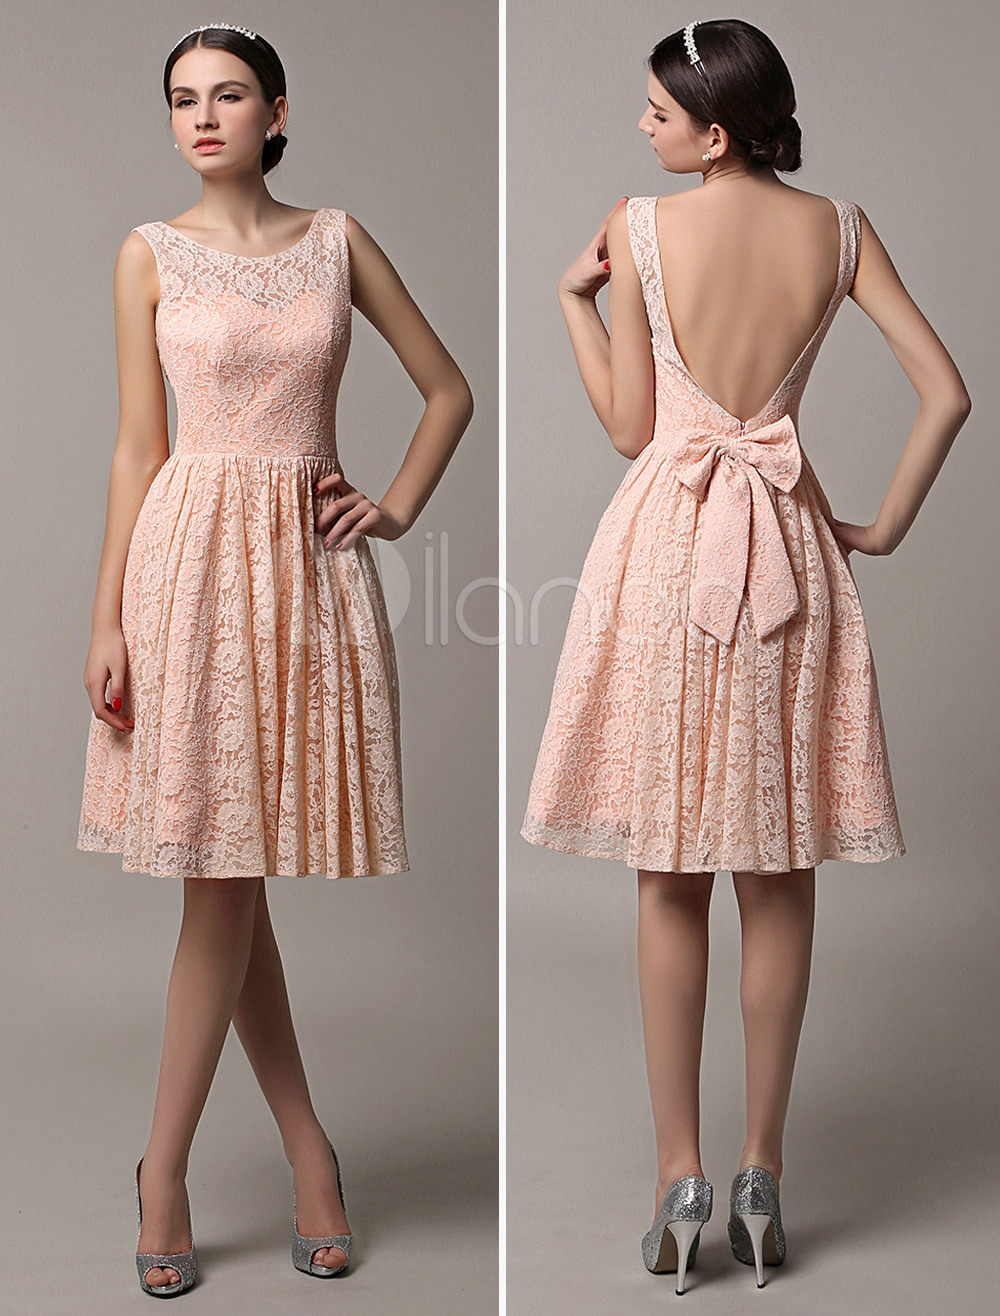 10 Cool Rosa Kleid Kurz Stylish20 Luxus Rosa Kleid Kurz für 2019